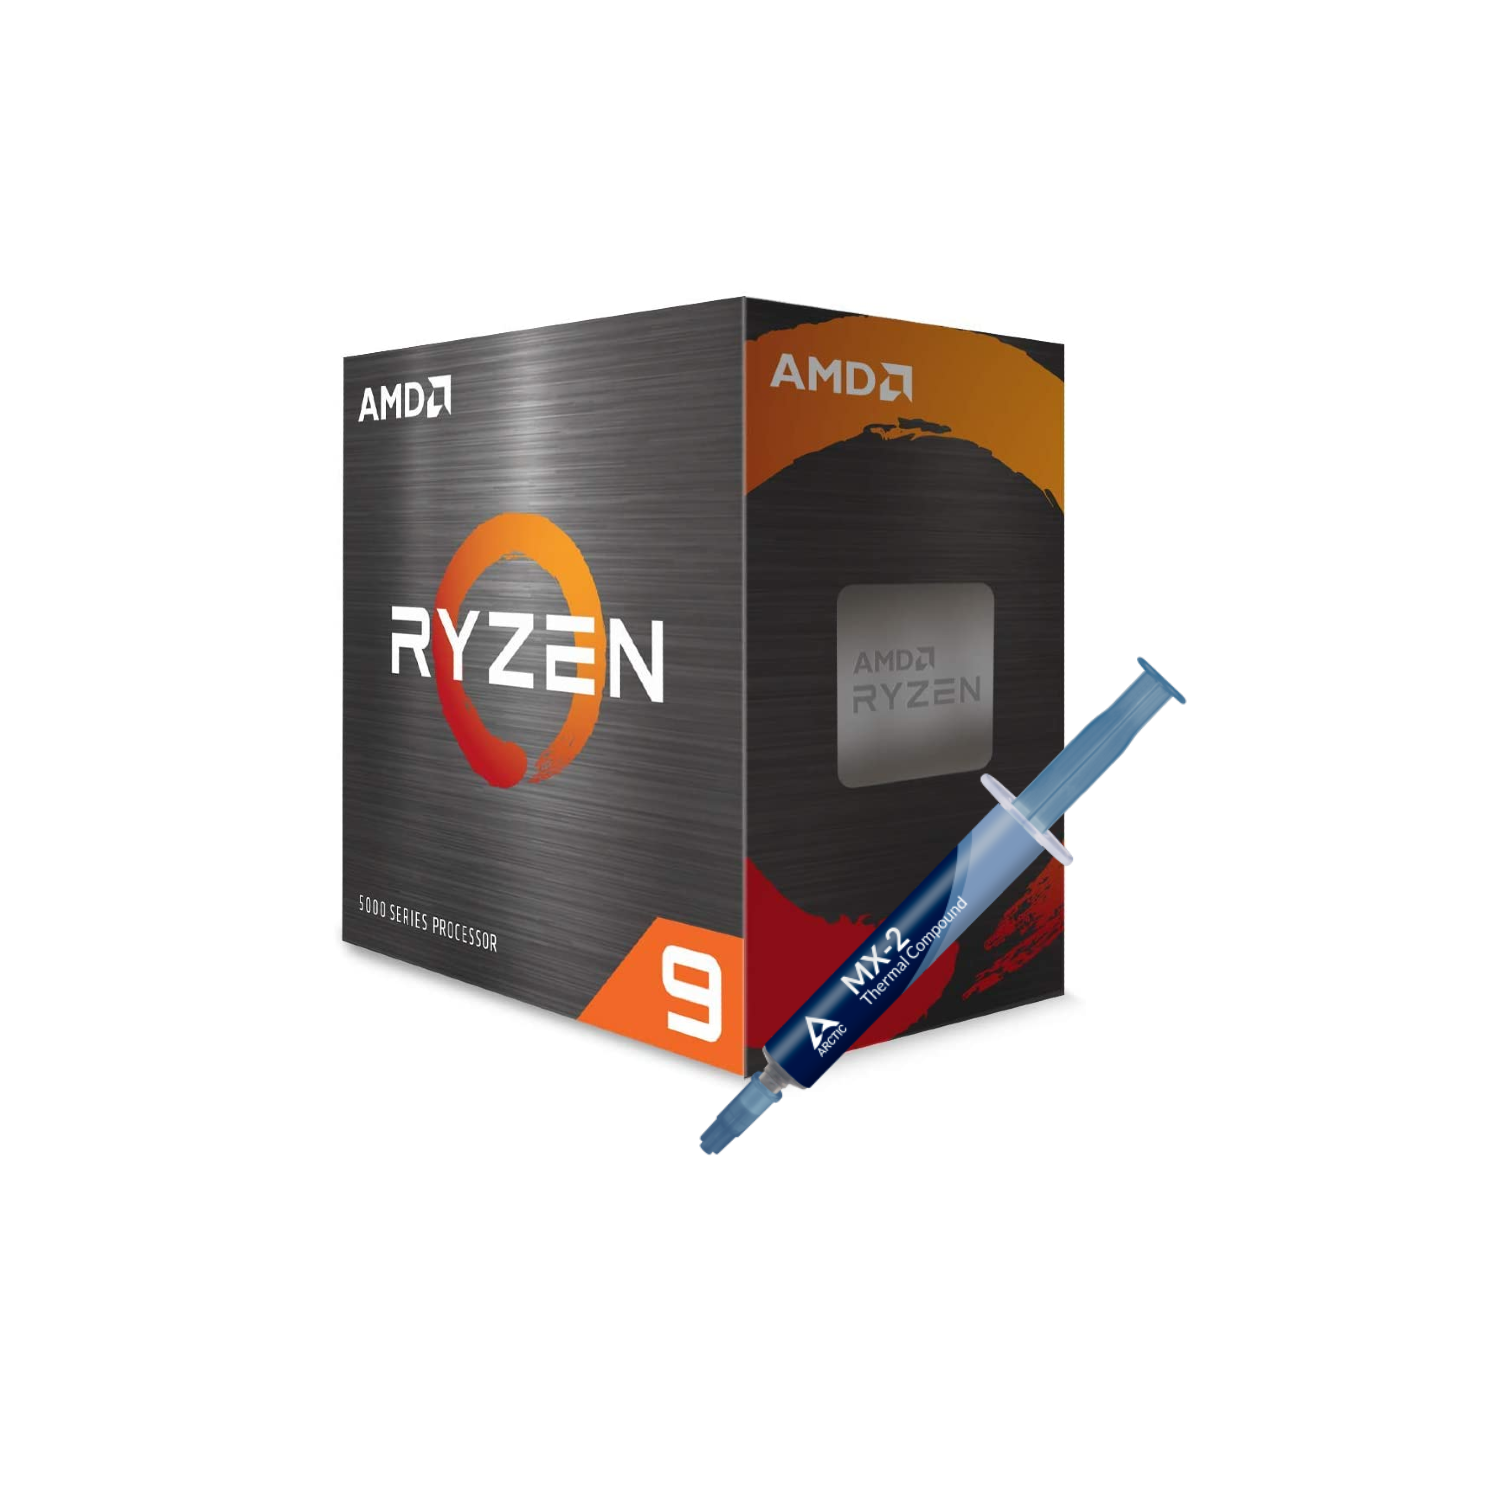 AMD Ryzen 9 5900X 4th Gen 12-core, 24-threads Unlocked Desktop Processor Without Cooler + Arctic MX-2 Thermal Compound 4g